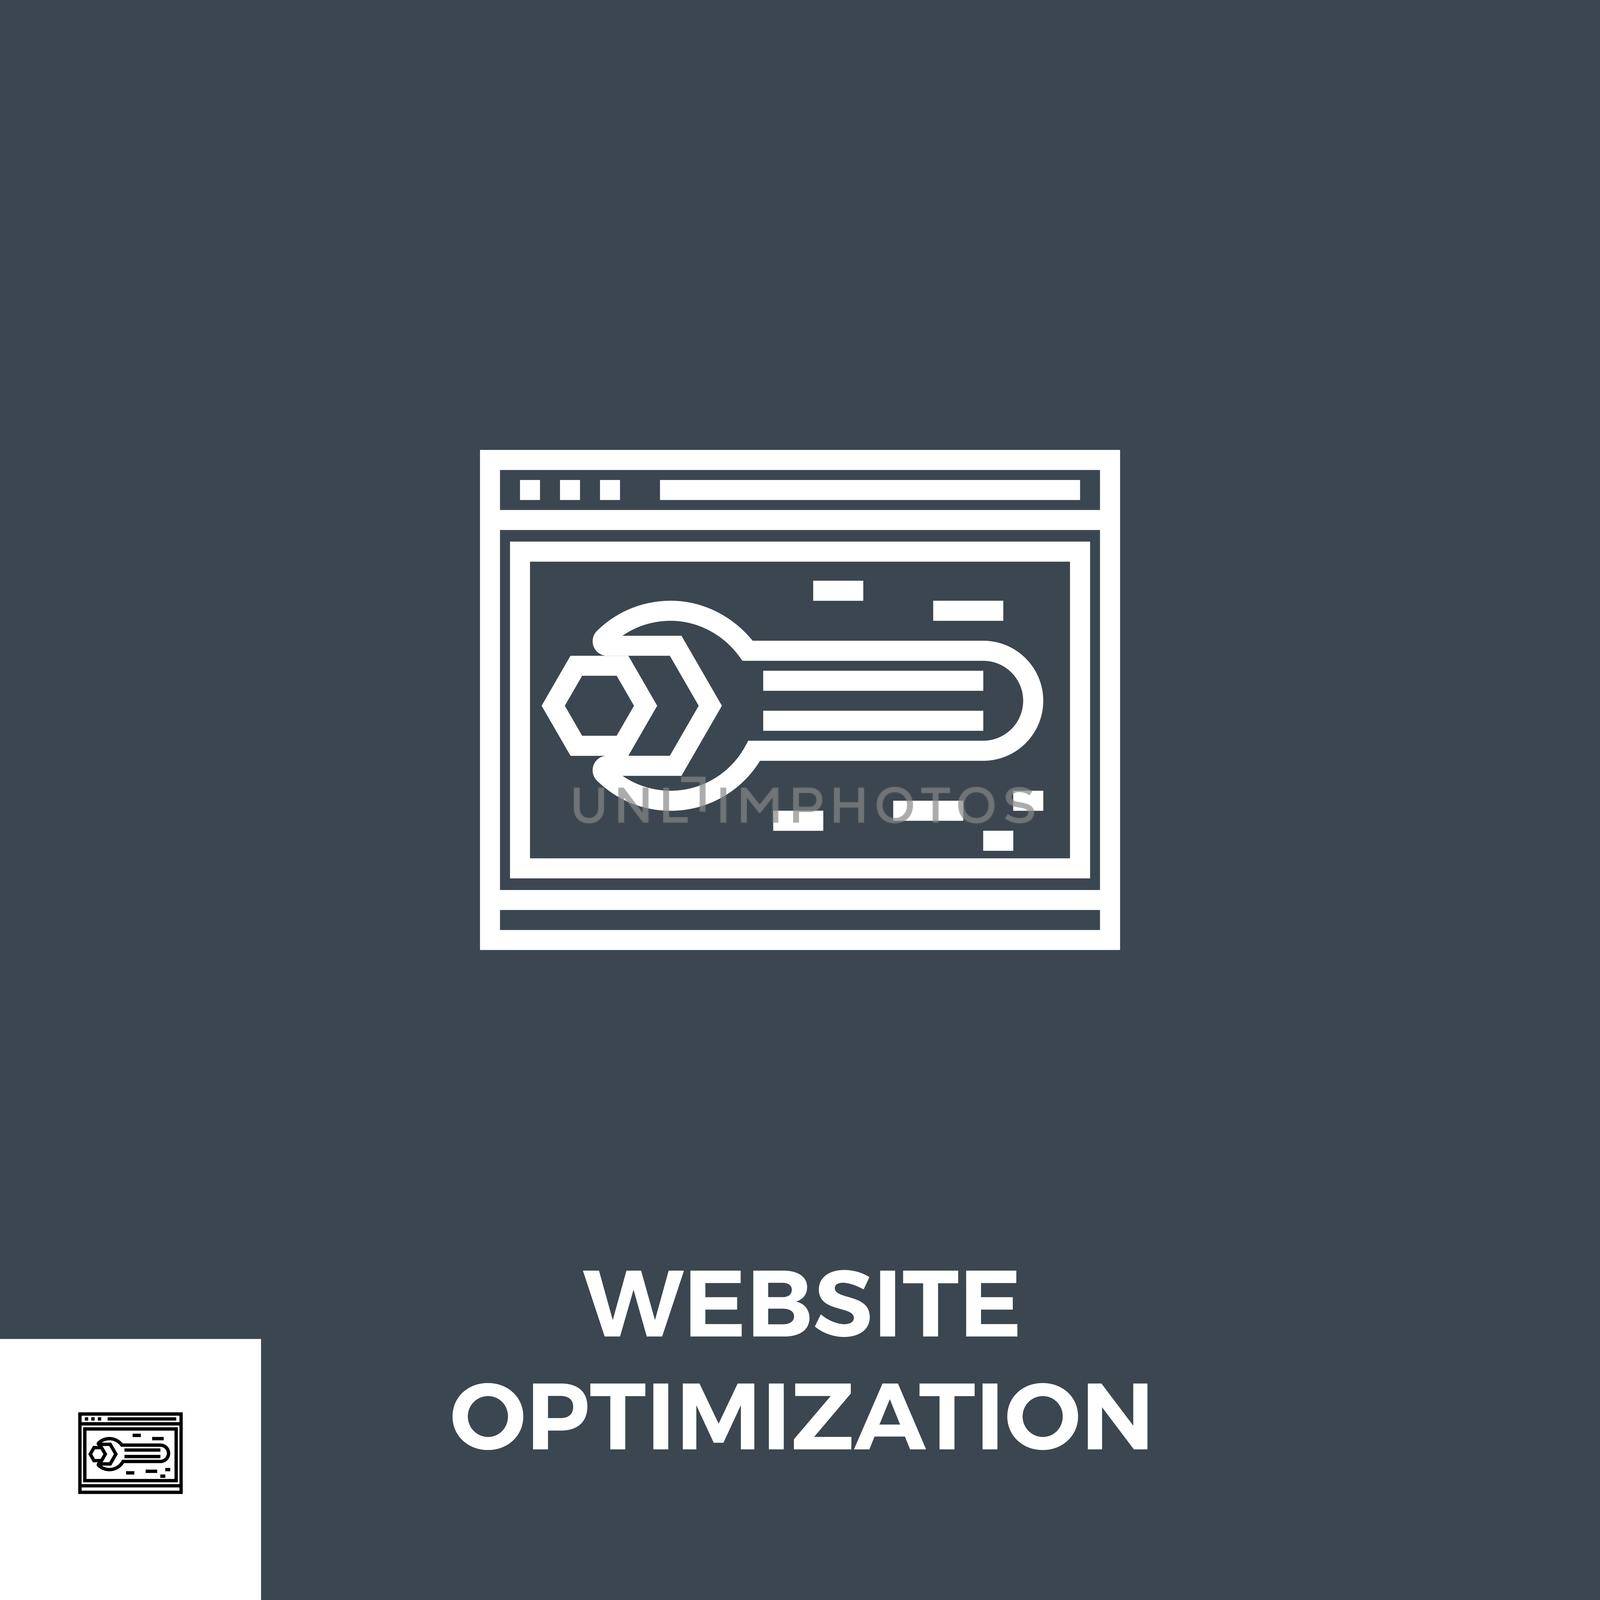 Website Optimization Line Icon by smoki